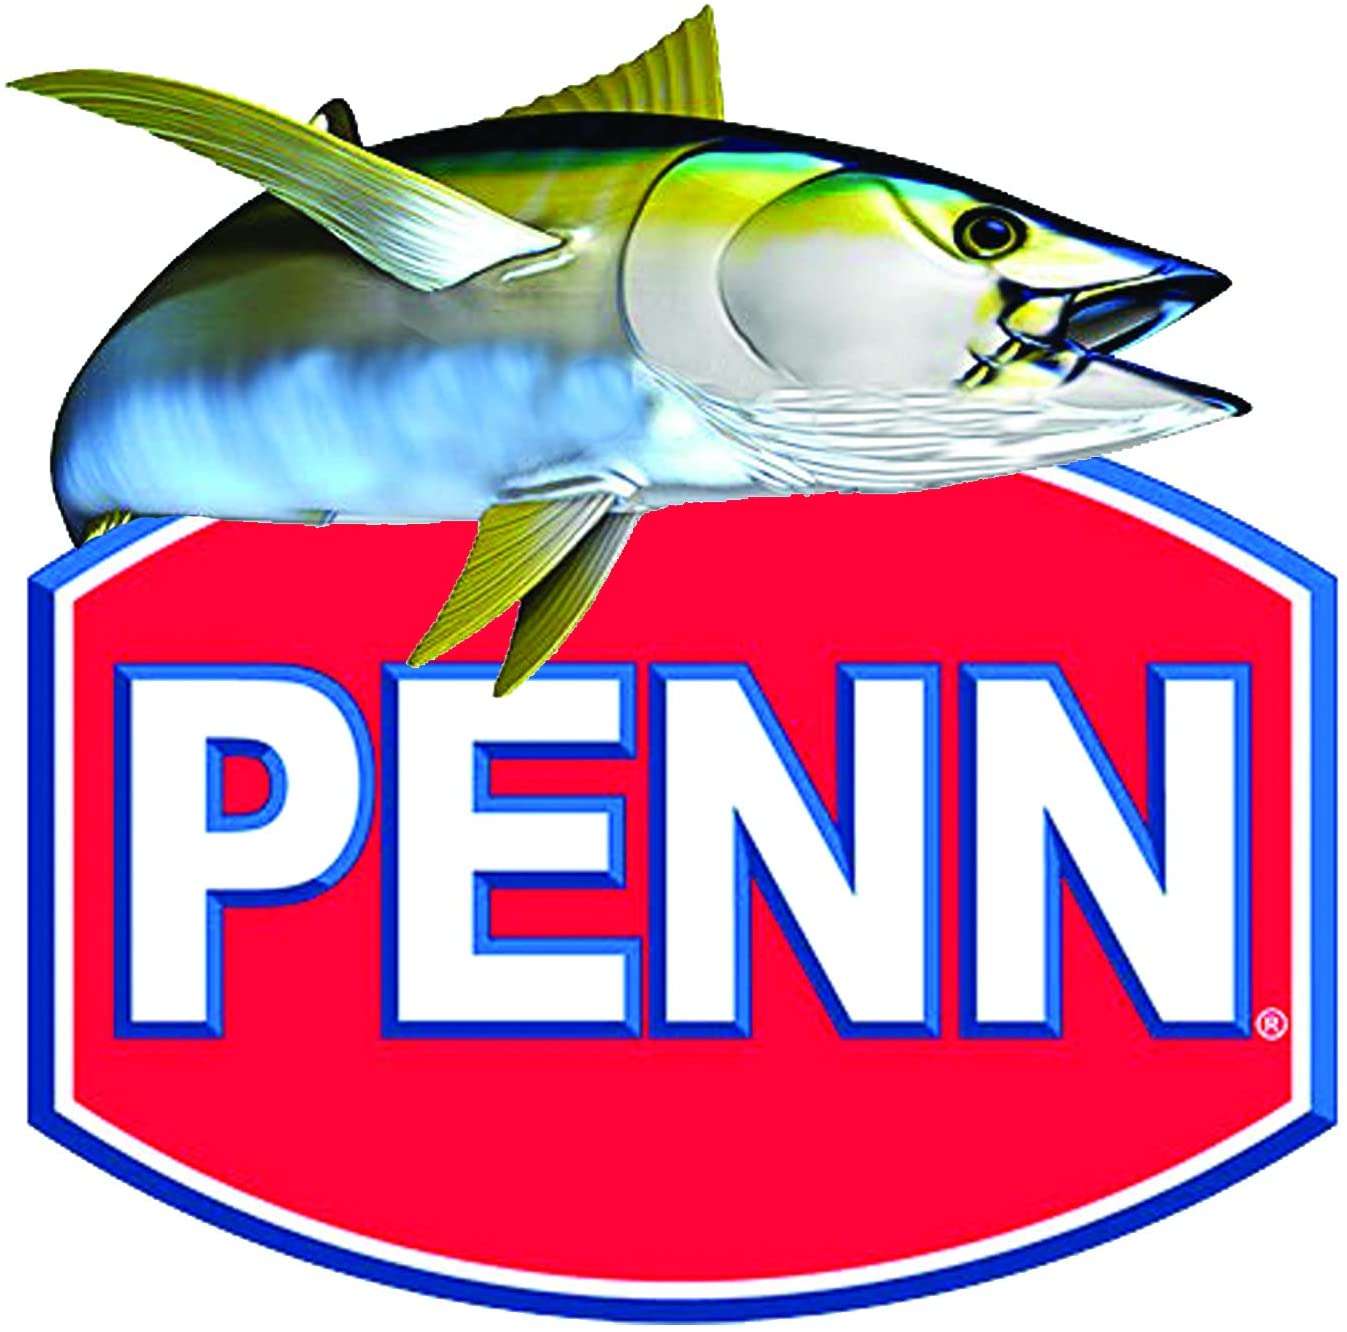 PENN FISHING STICKER DECAL USA TUNA FISH LABEL DECAL LURE REEL TACKLE BOX  USA